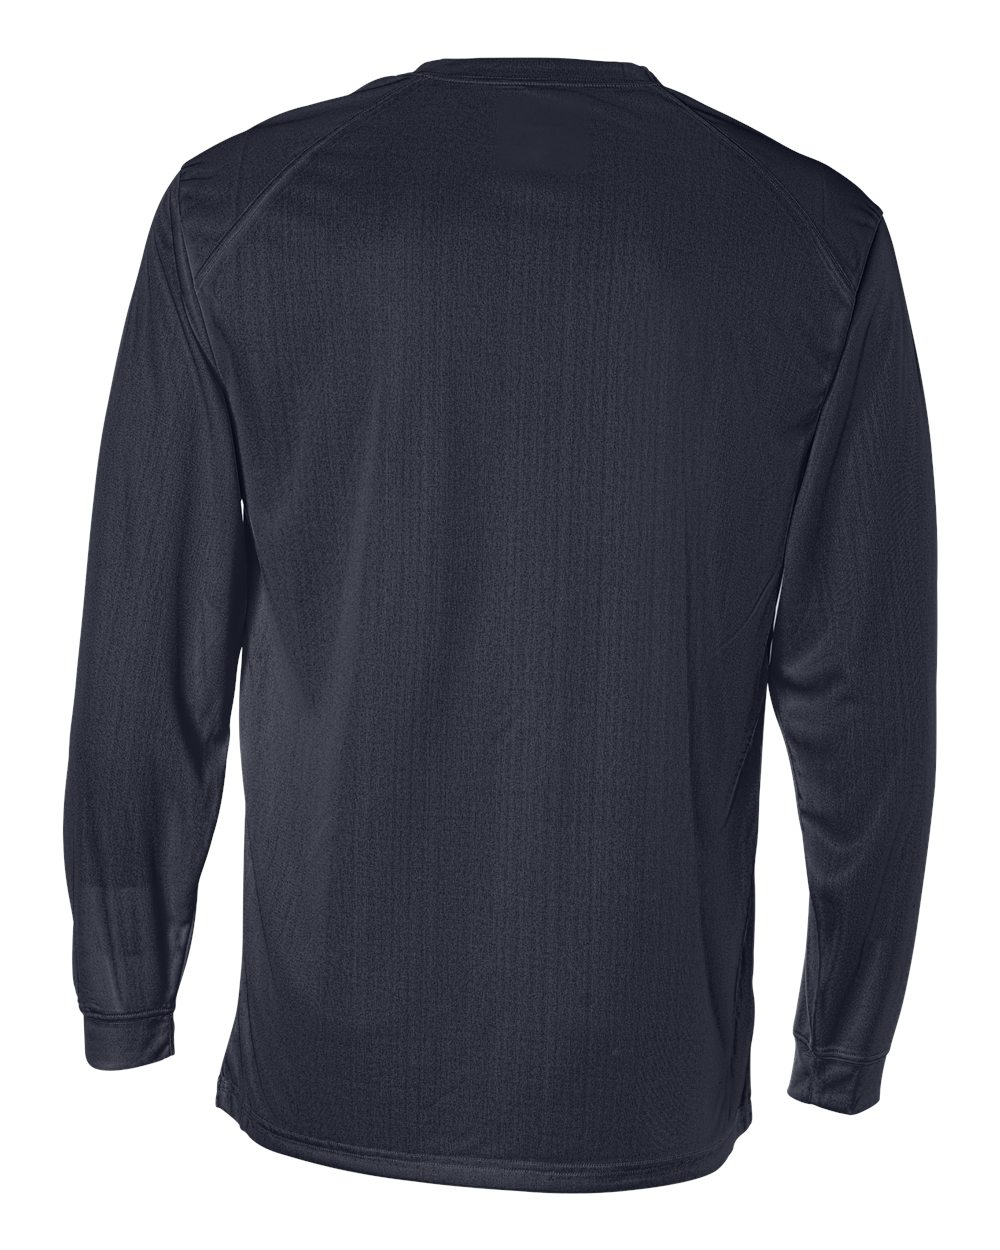 Badger Mens Blank B-Core Long Sleeve T Shirt 4104 up to 3XL | eBay